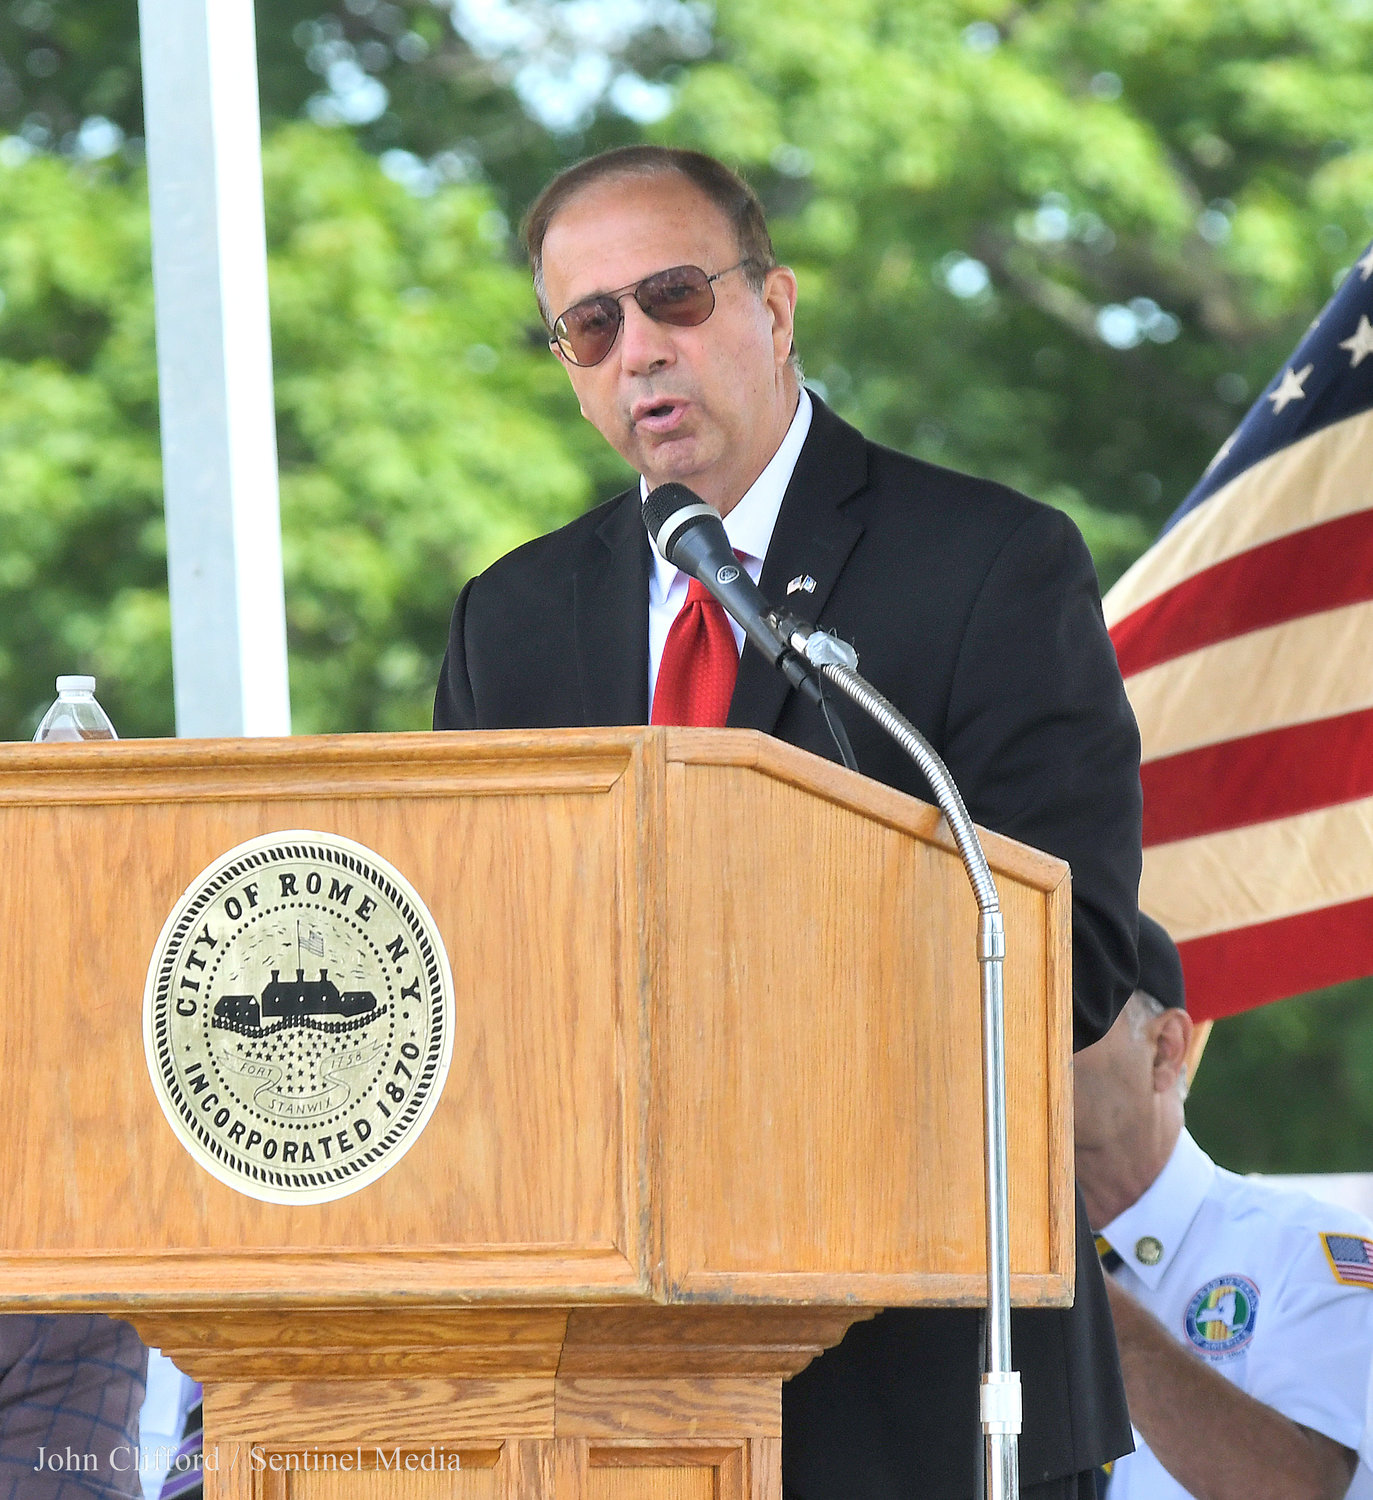 State senator Joseph Griffo speaks during the dedication ceremony.